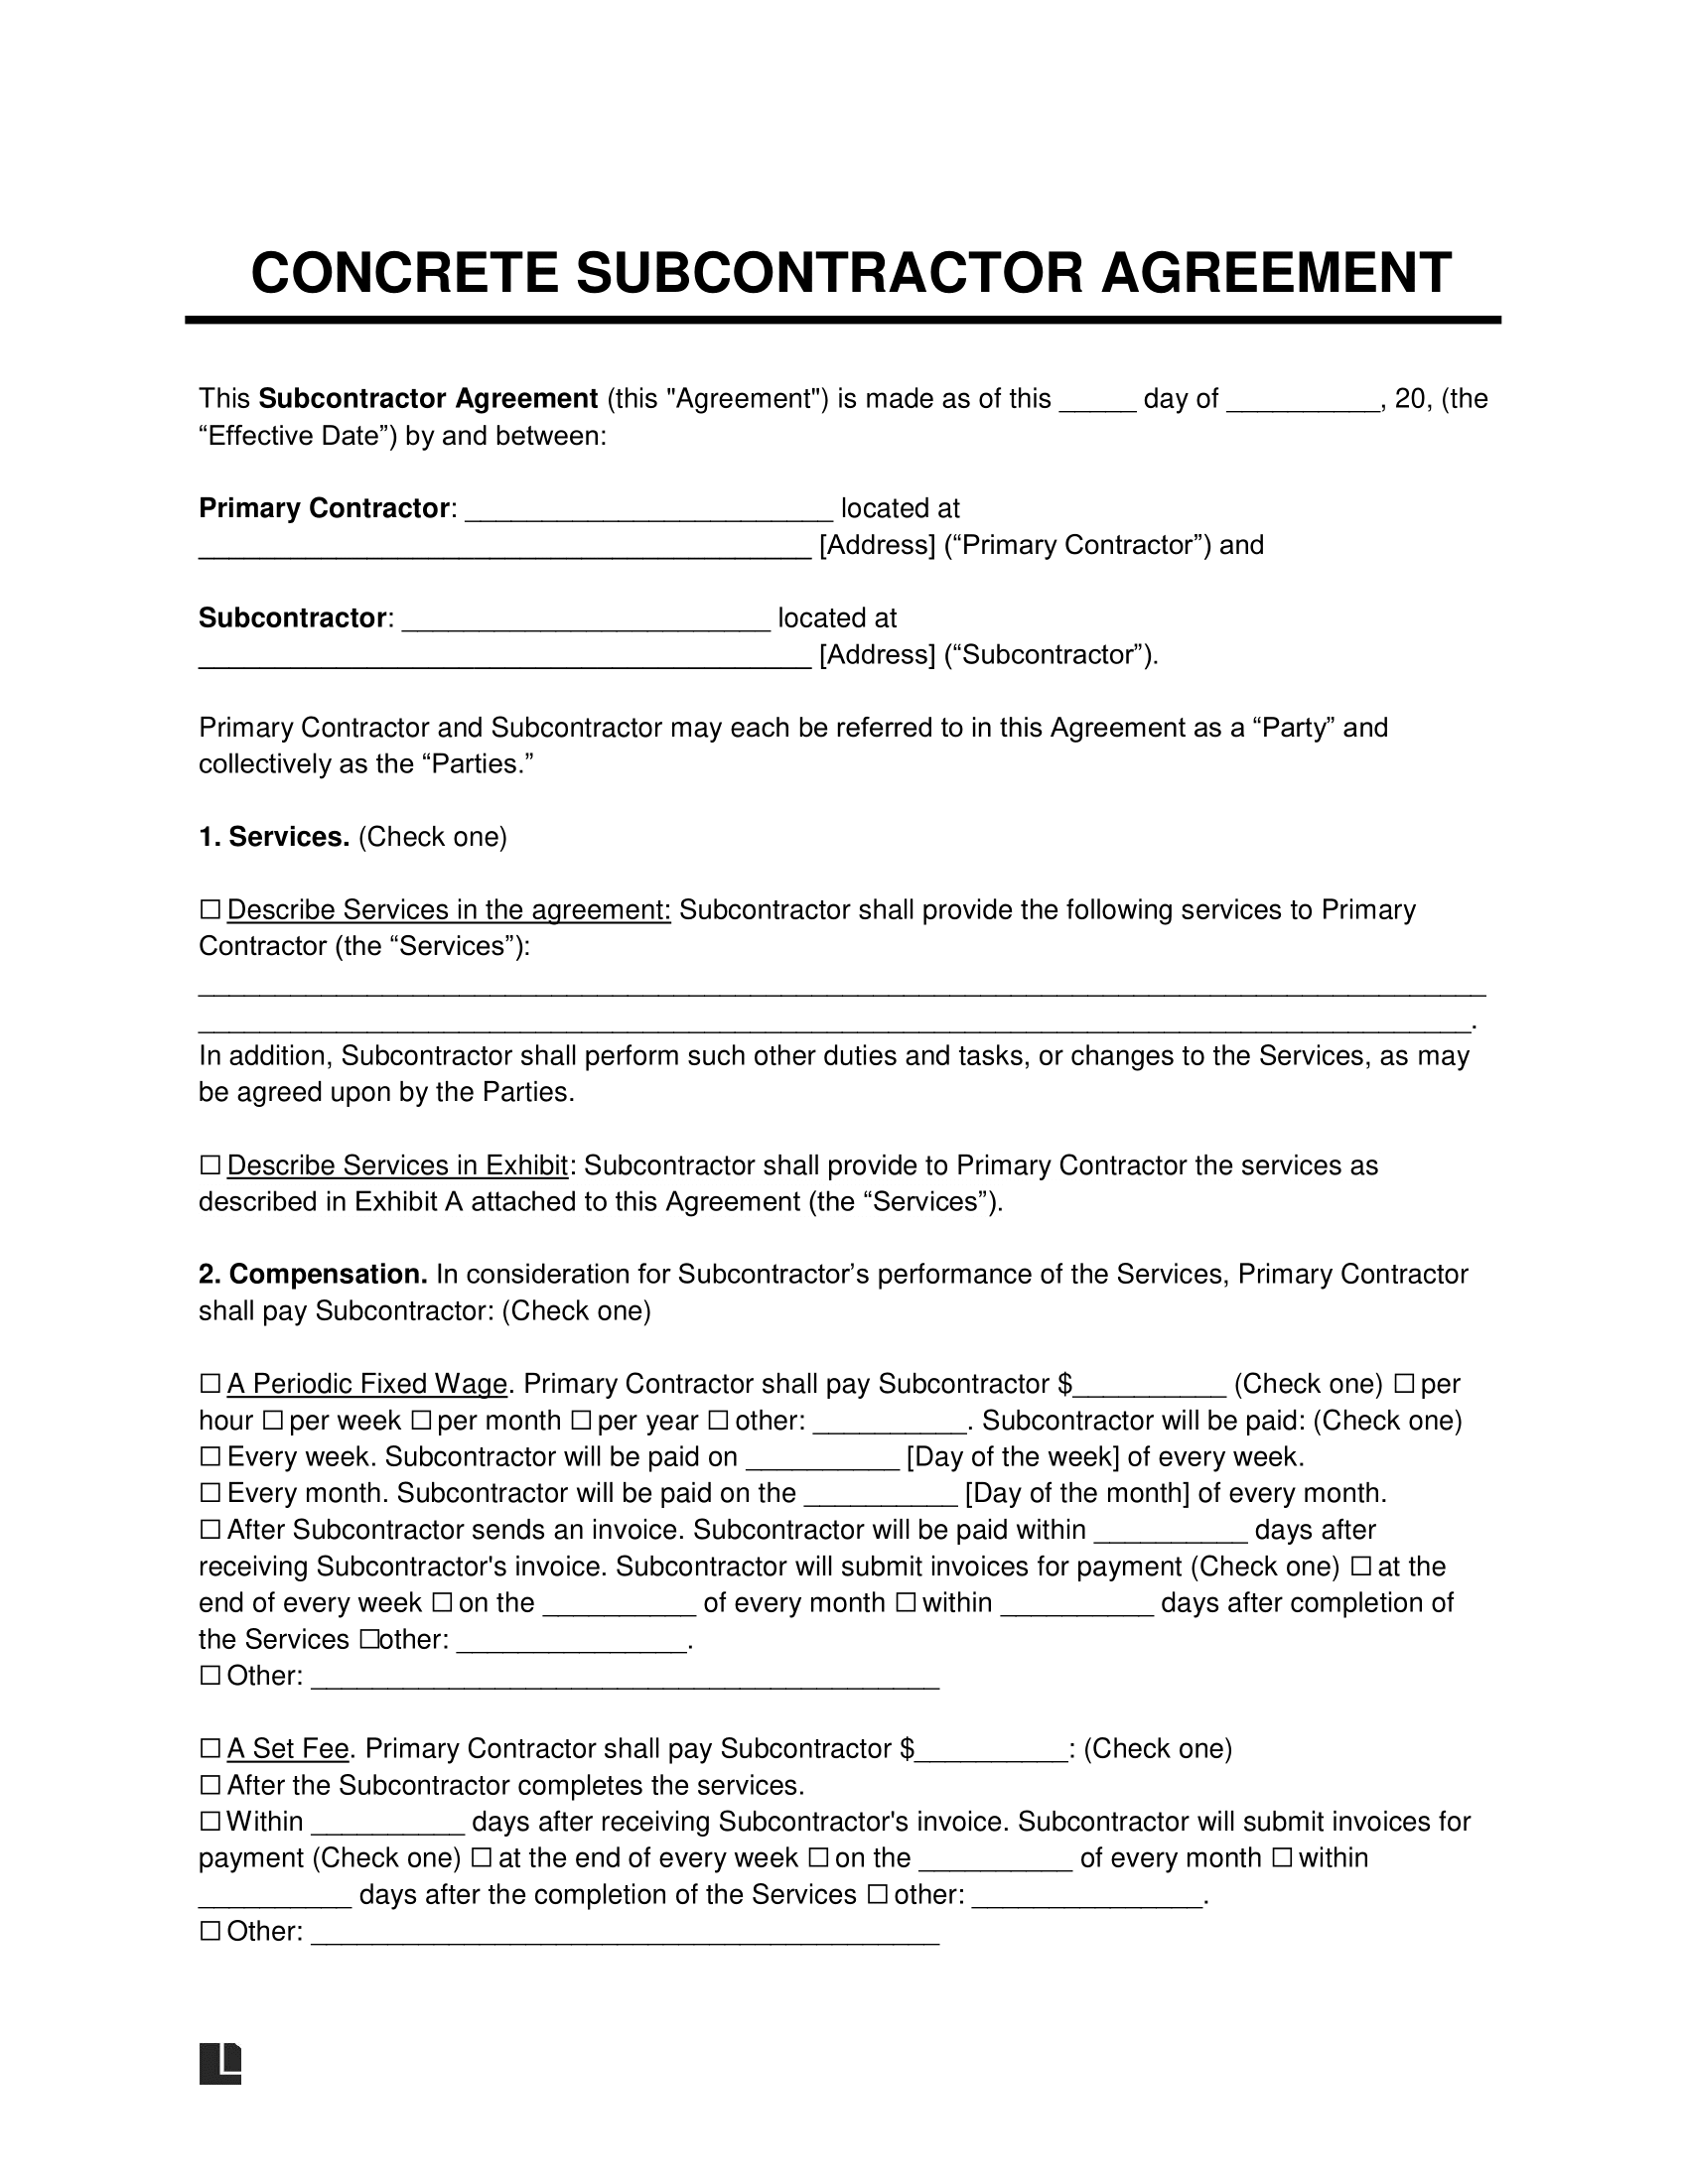 Concrete Subcontractor Agreement Template